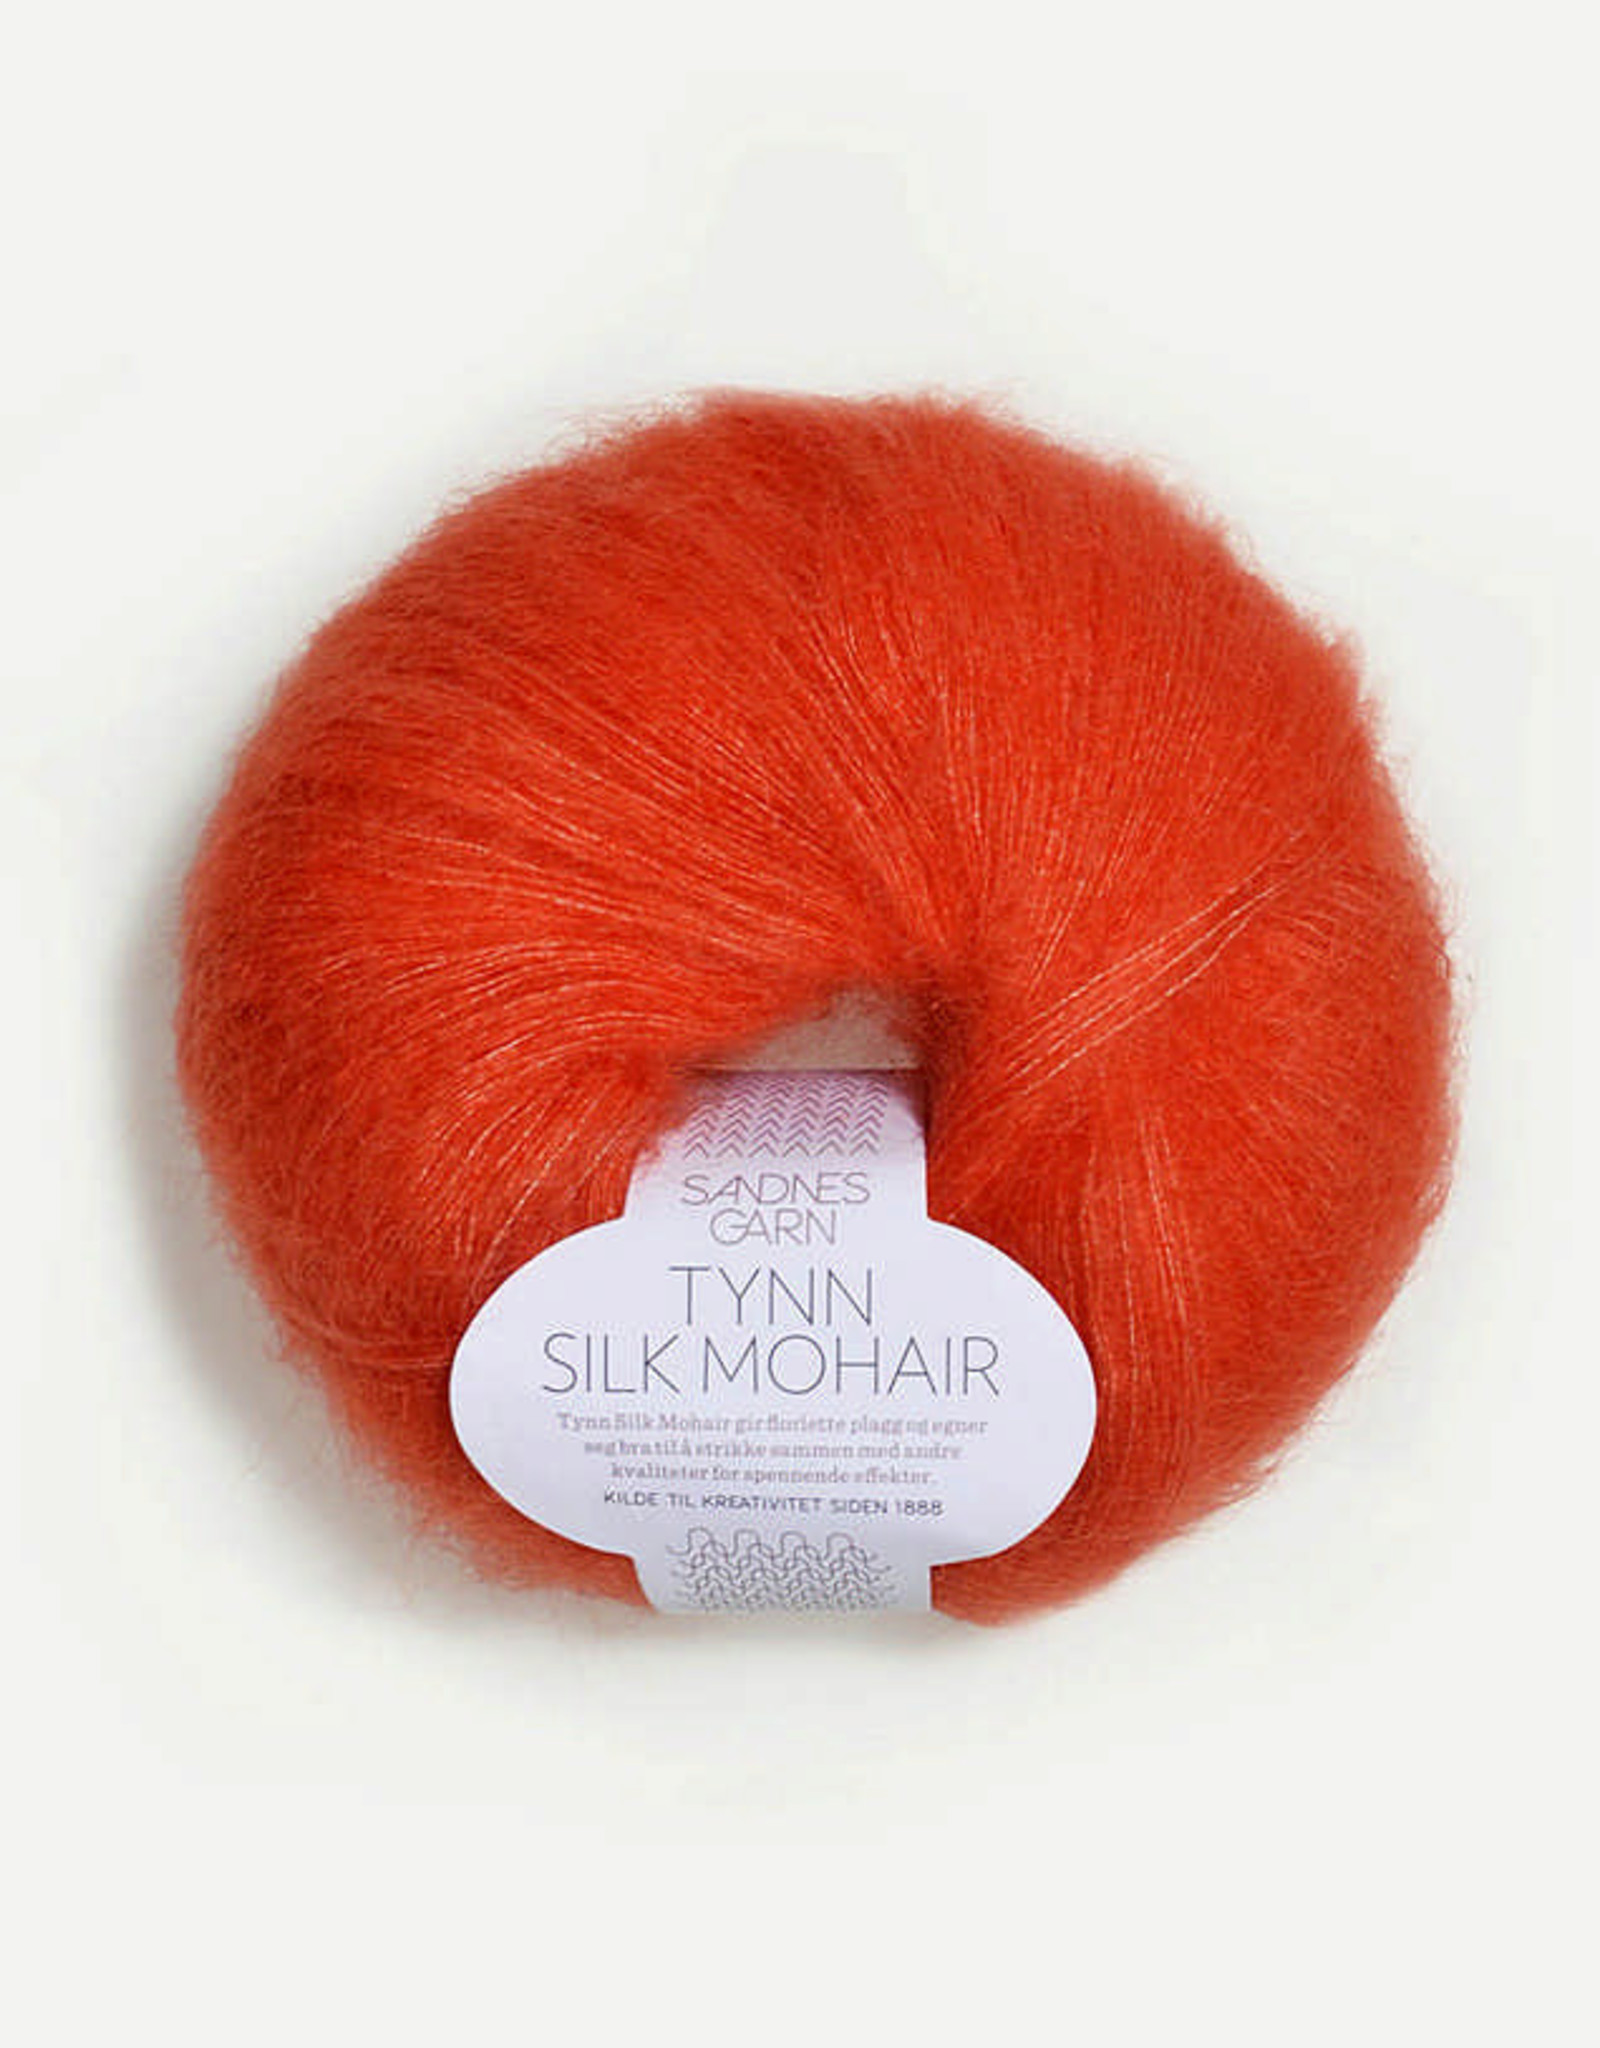 Republikanske parti Ryd op Traktat Tynn Silk Mohair 3818 orange - The Blue Purl - Yarn and Knitting Shop